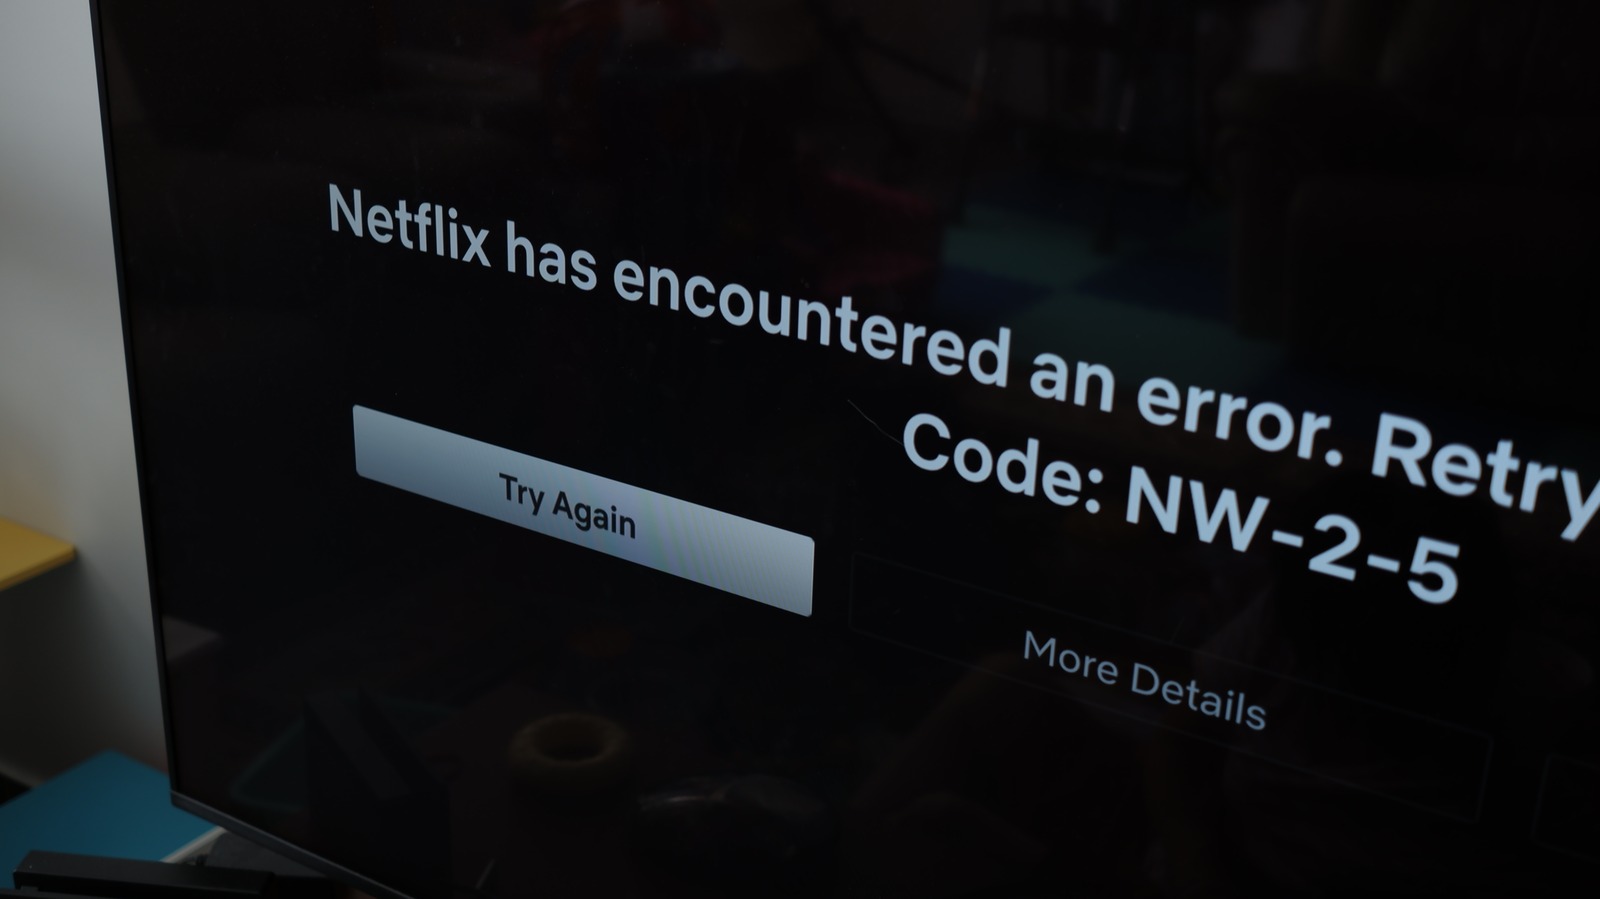 What Is Netflix Error Code NW-2-5 & How To Fix It